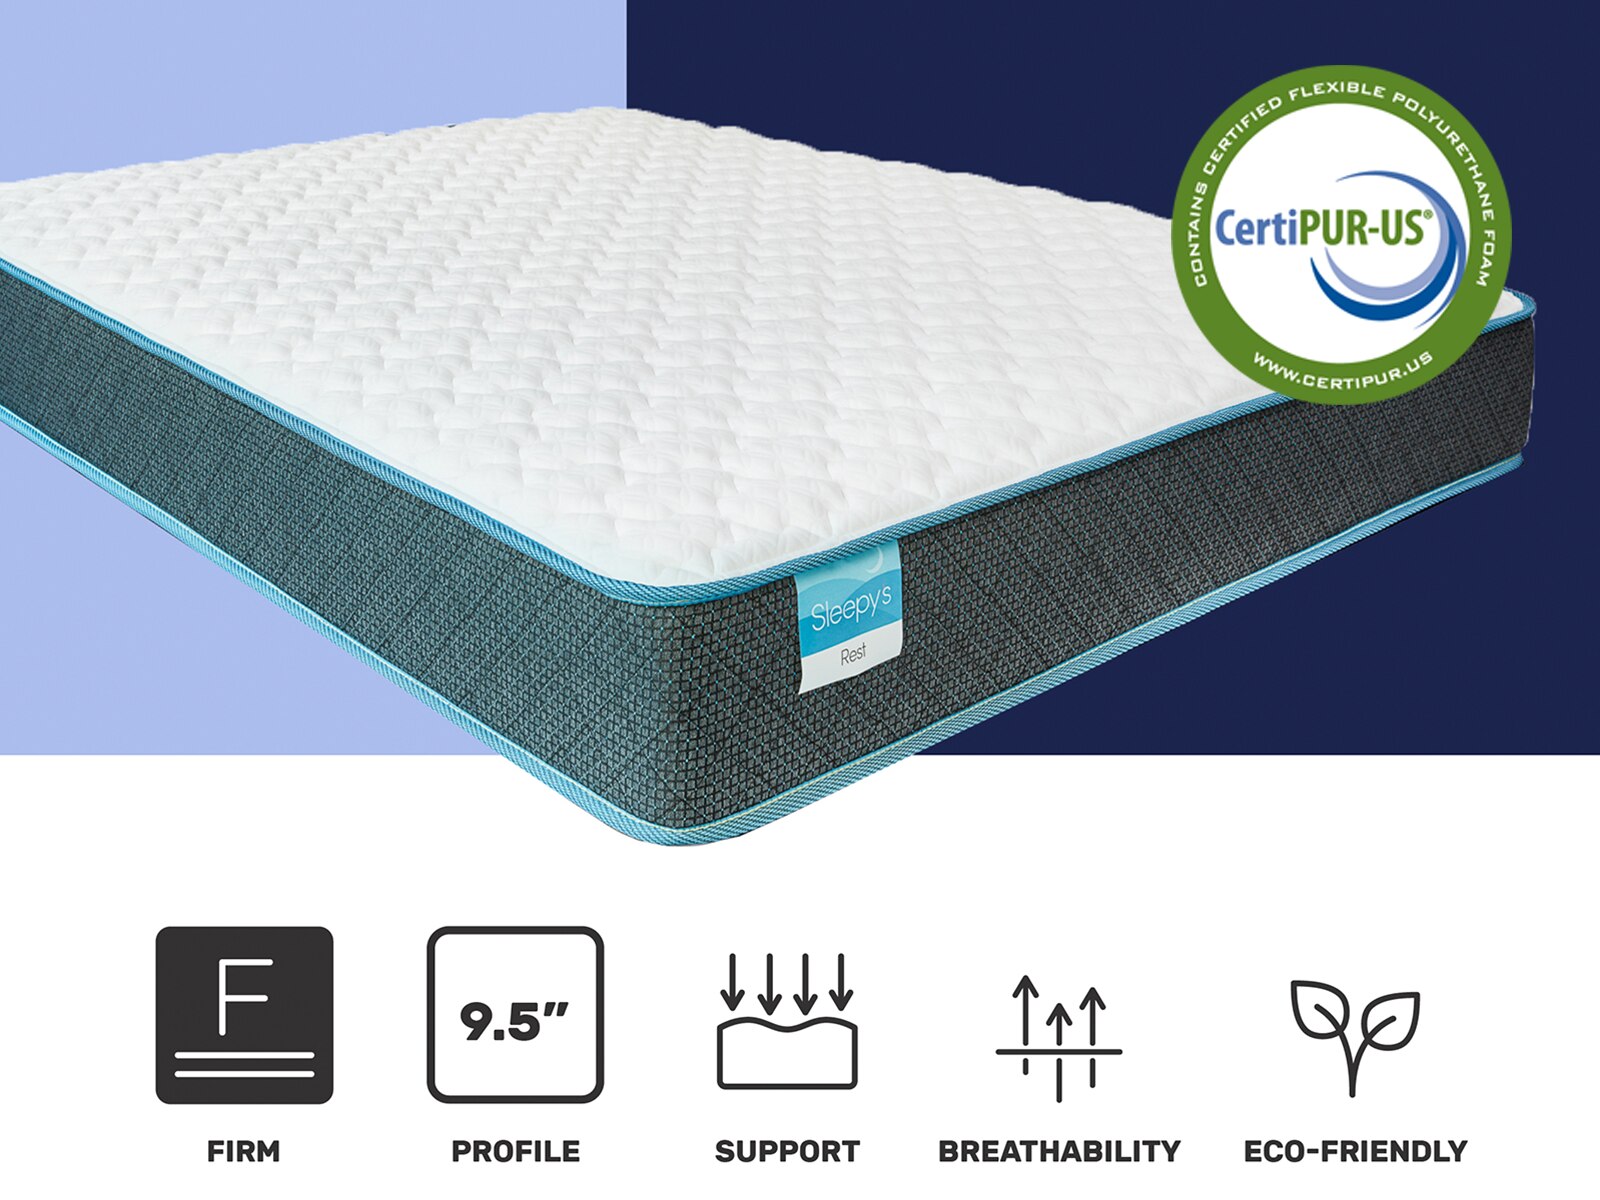 selepy's rest 9.5 firm innerspring mattress